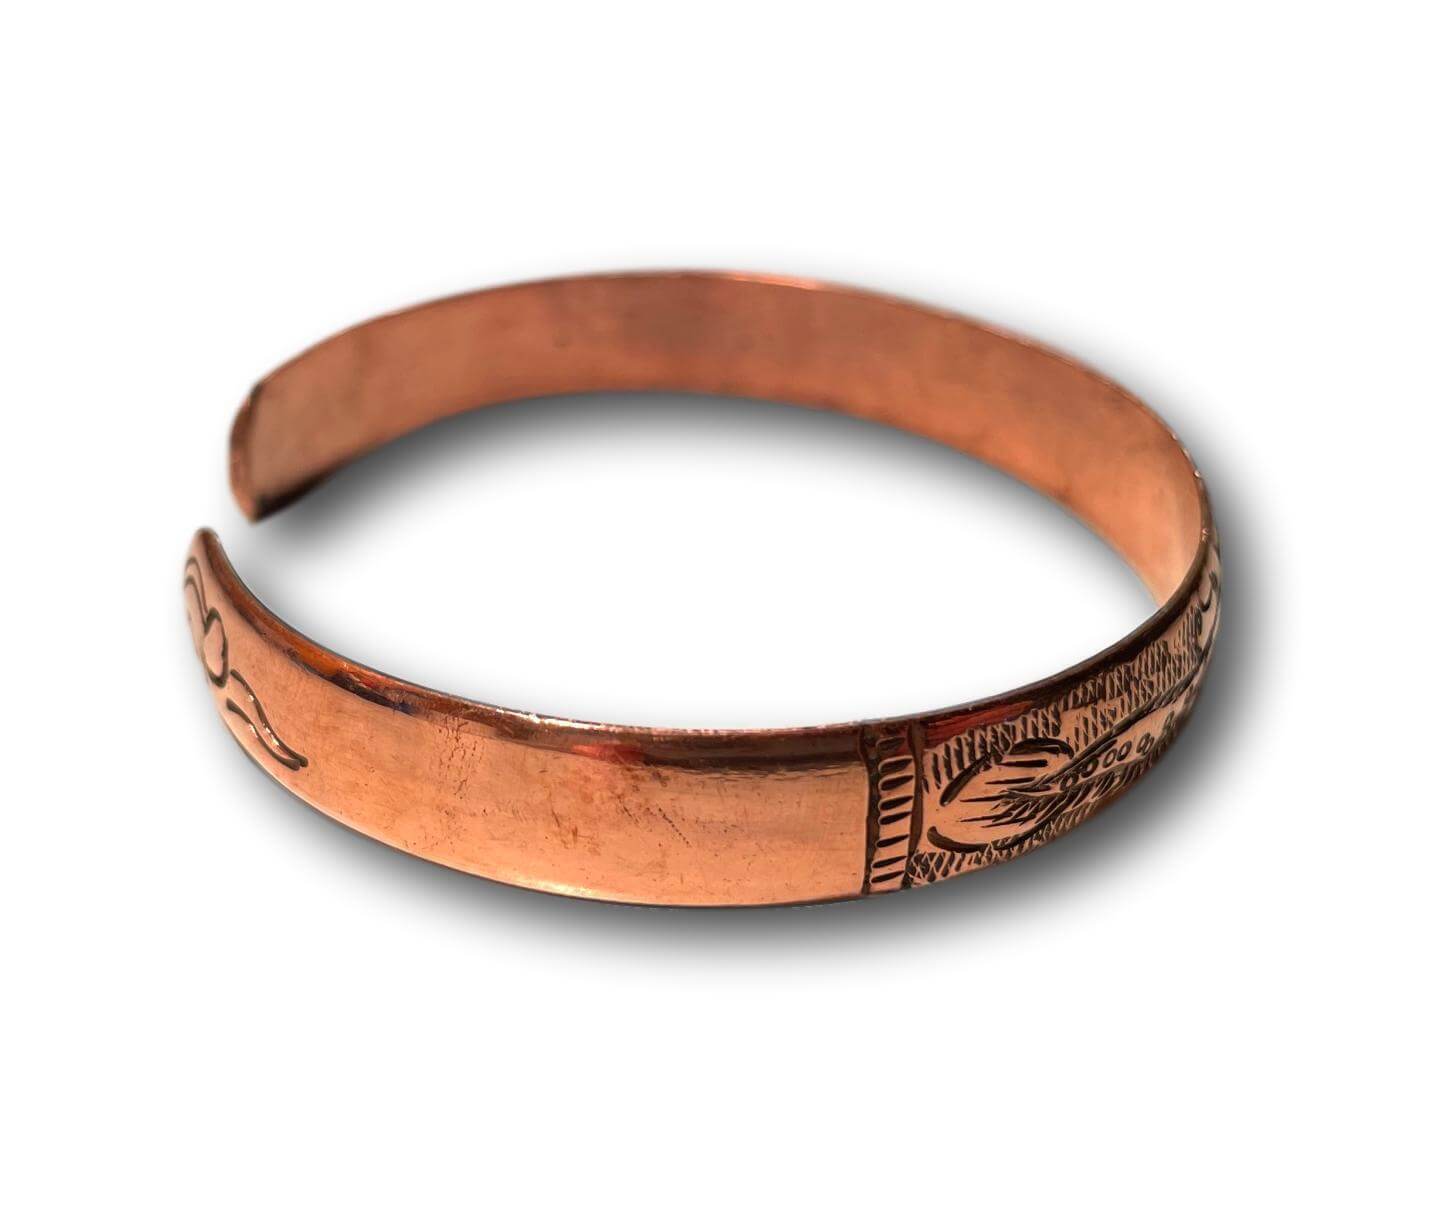 Details 88+ copper band bracelet - POPPY